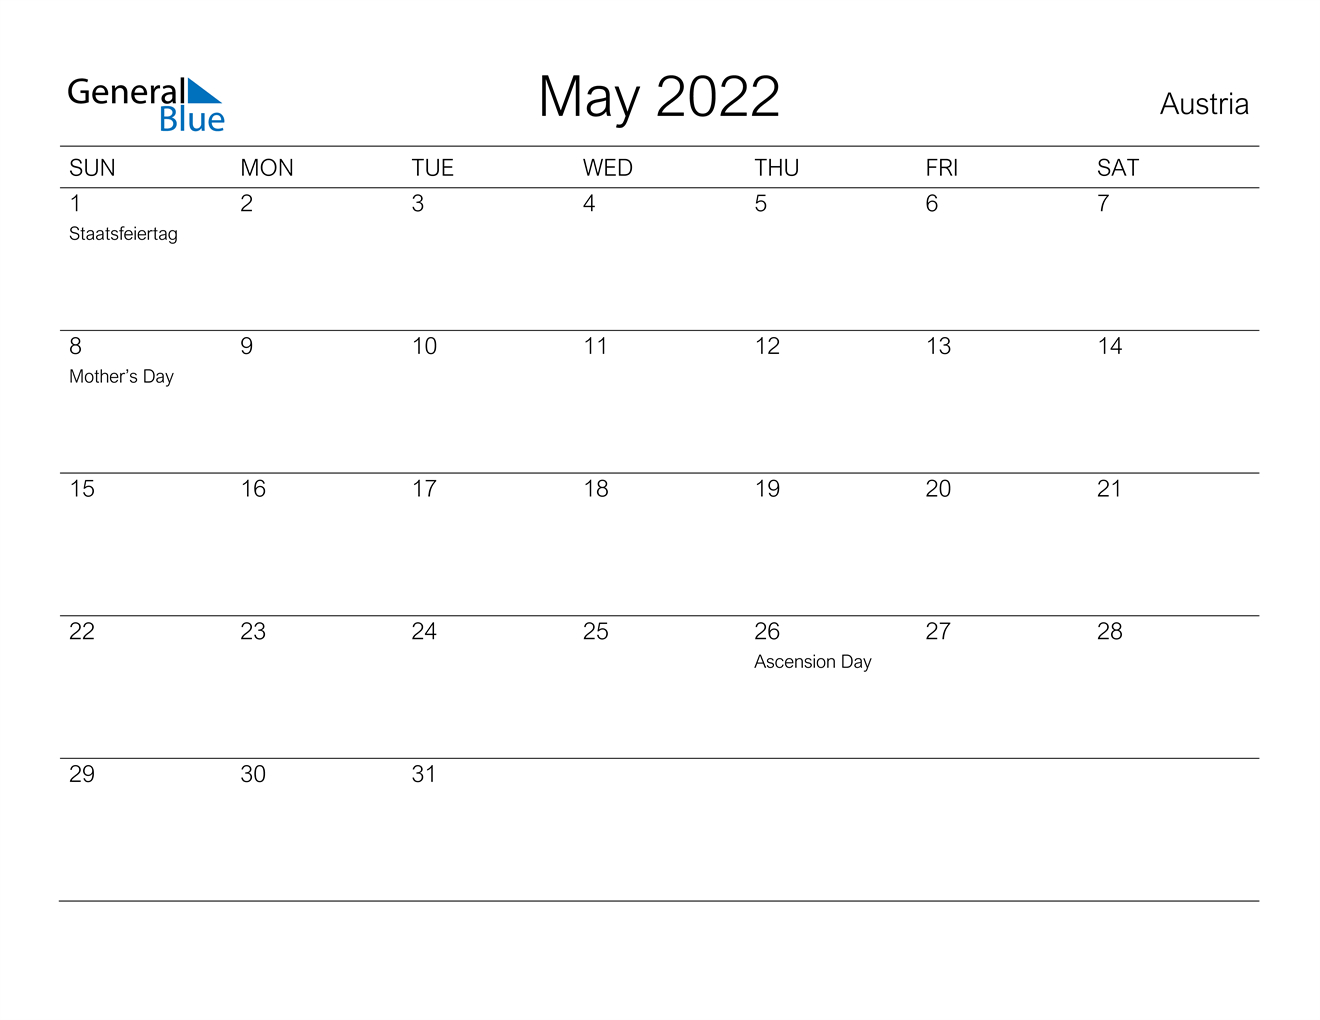 May 2022 Calendar - Austria